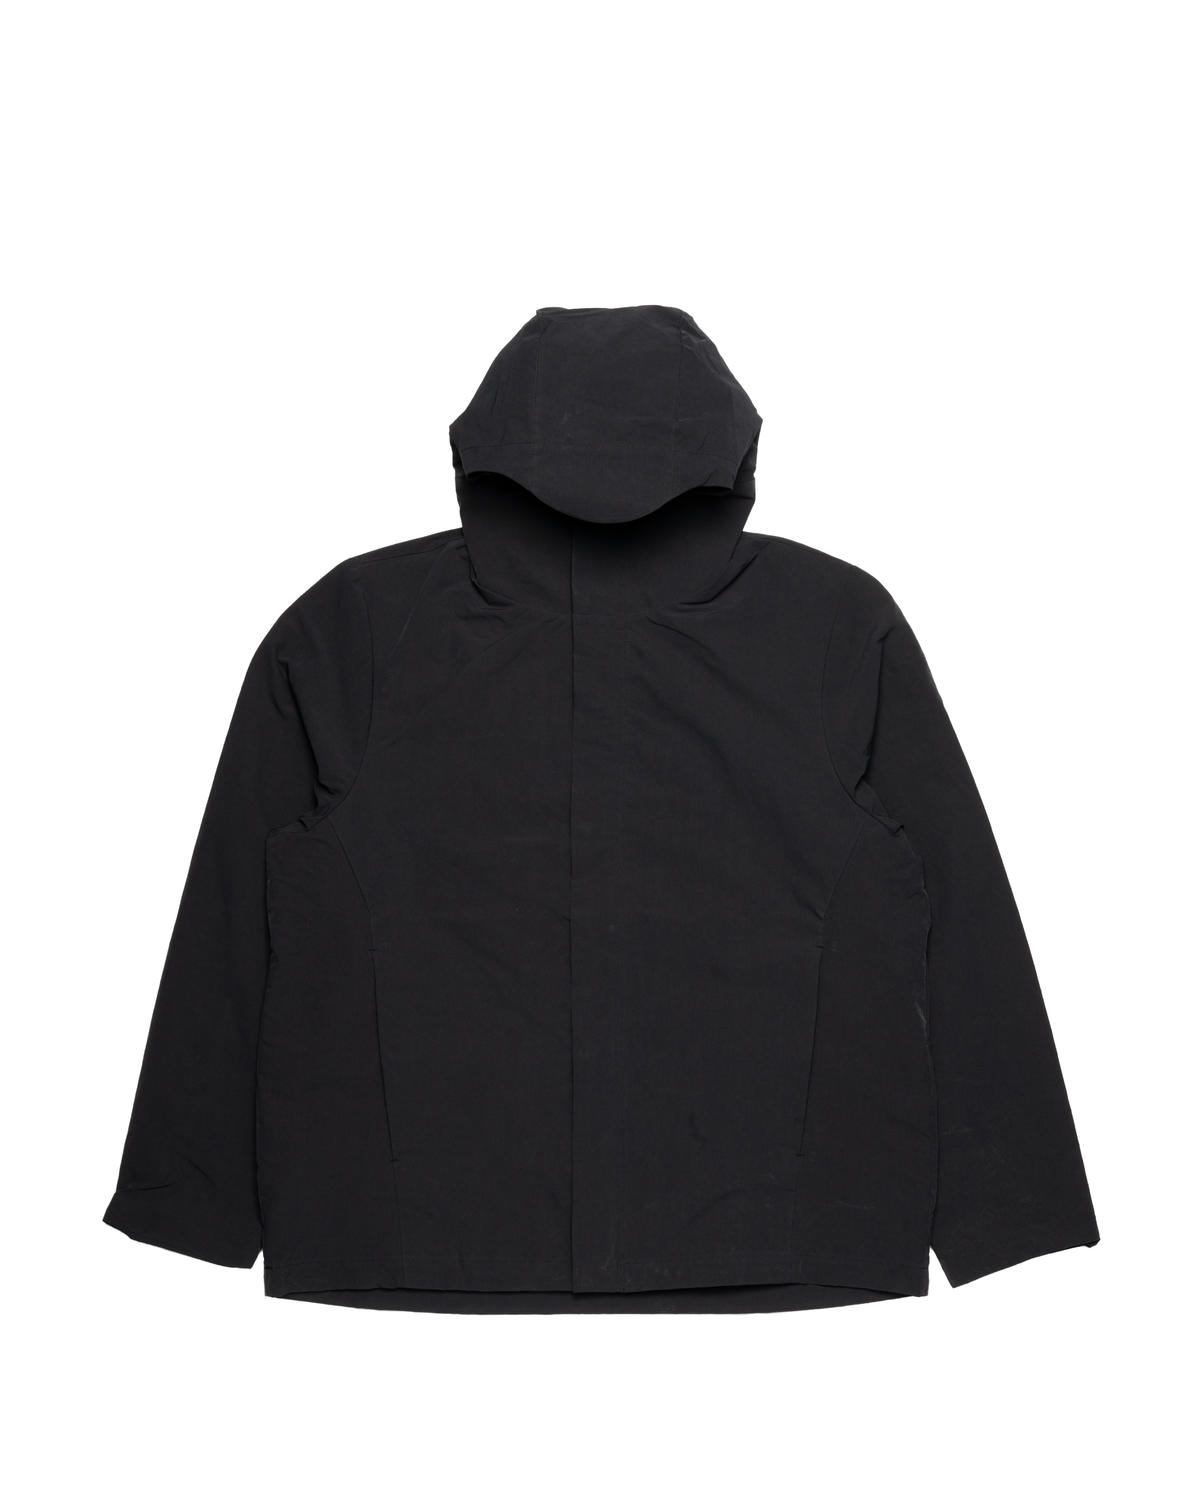 Arys T.H.E jacket | X180-vlc | AFEW STORE